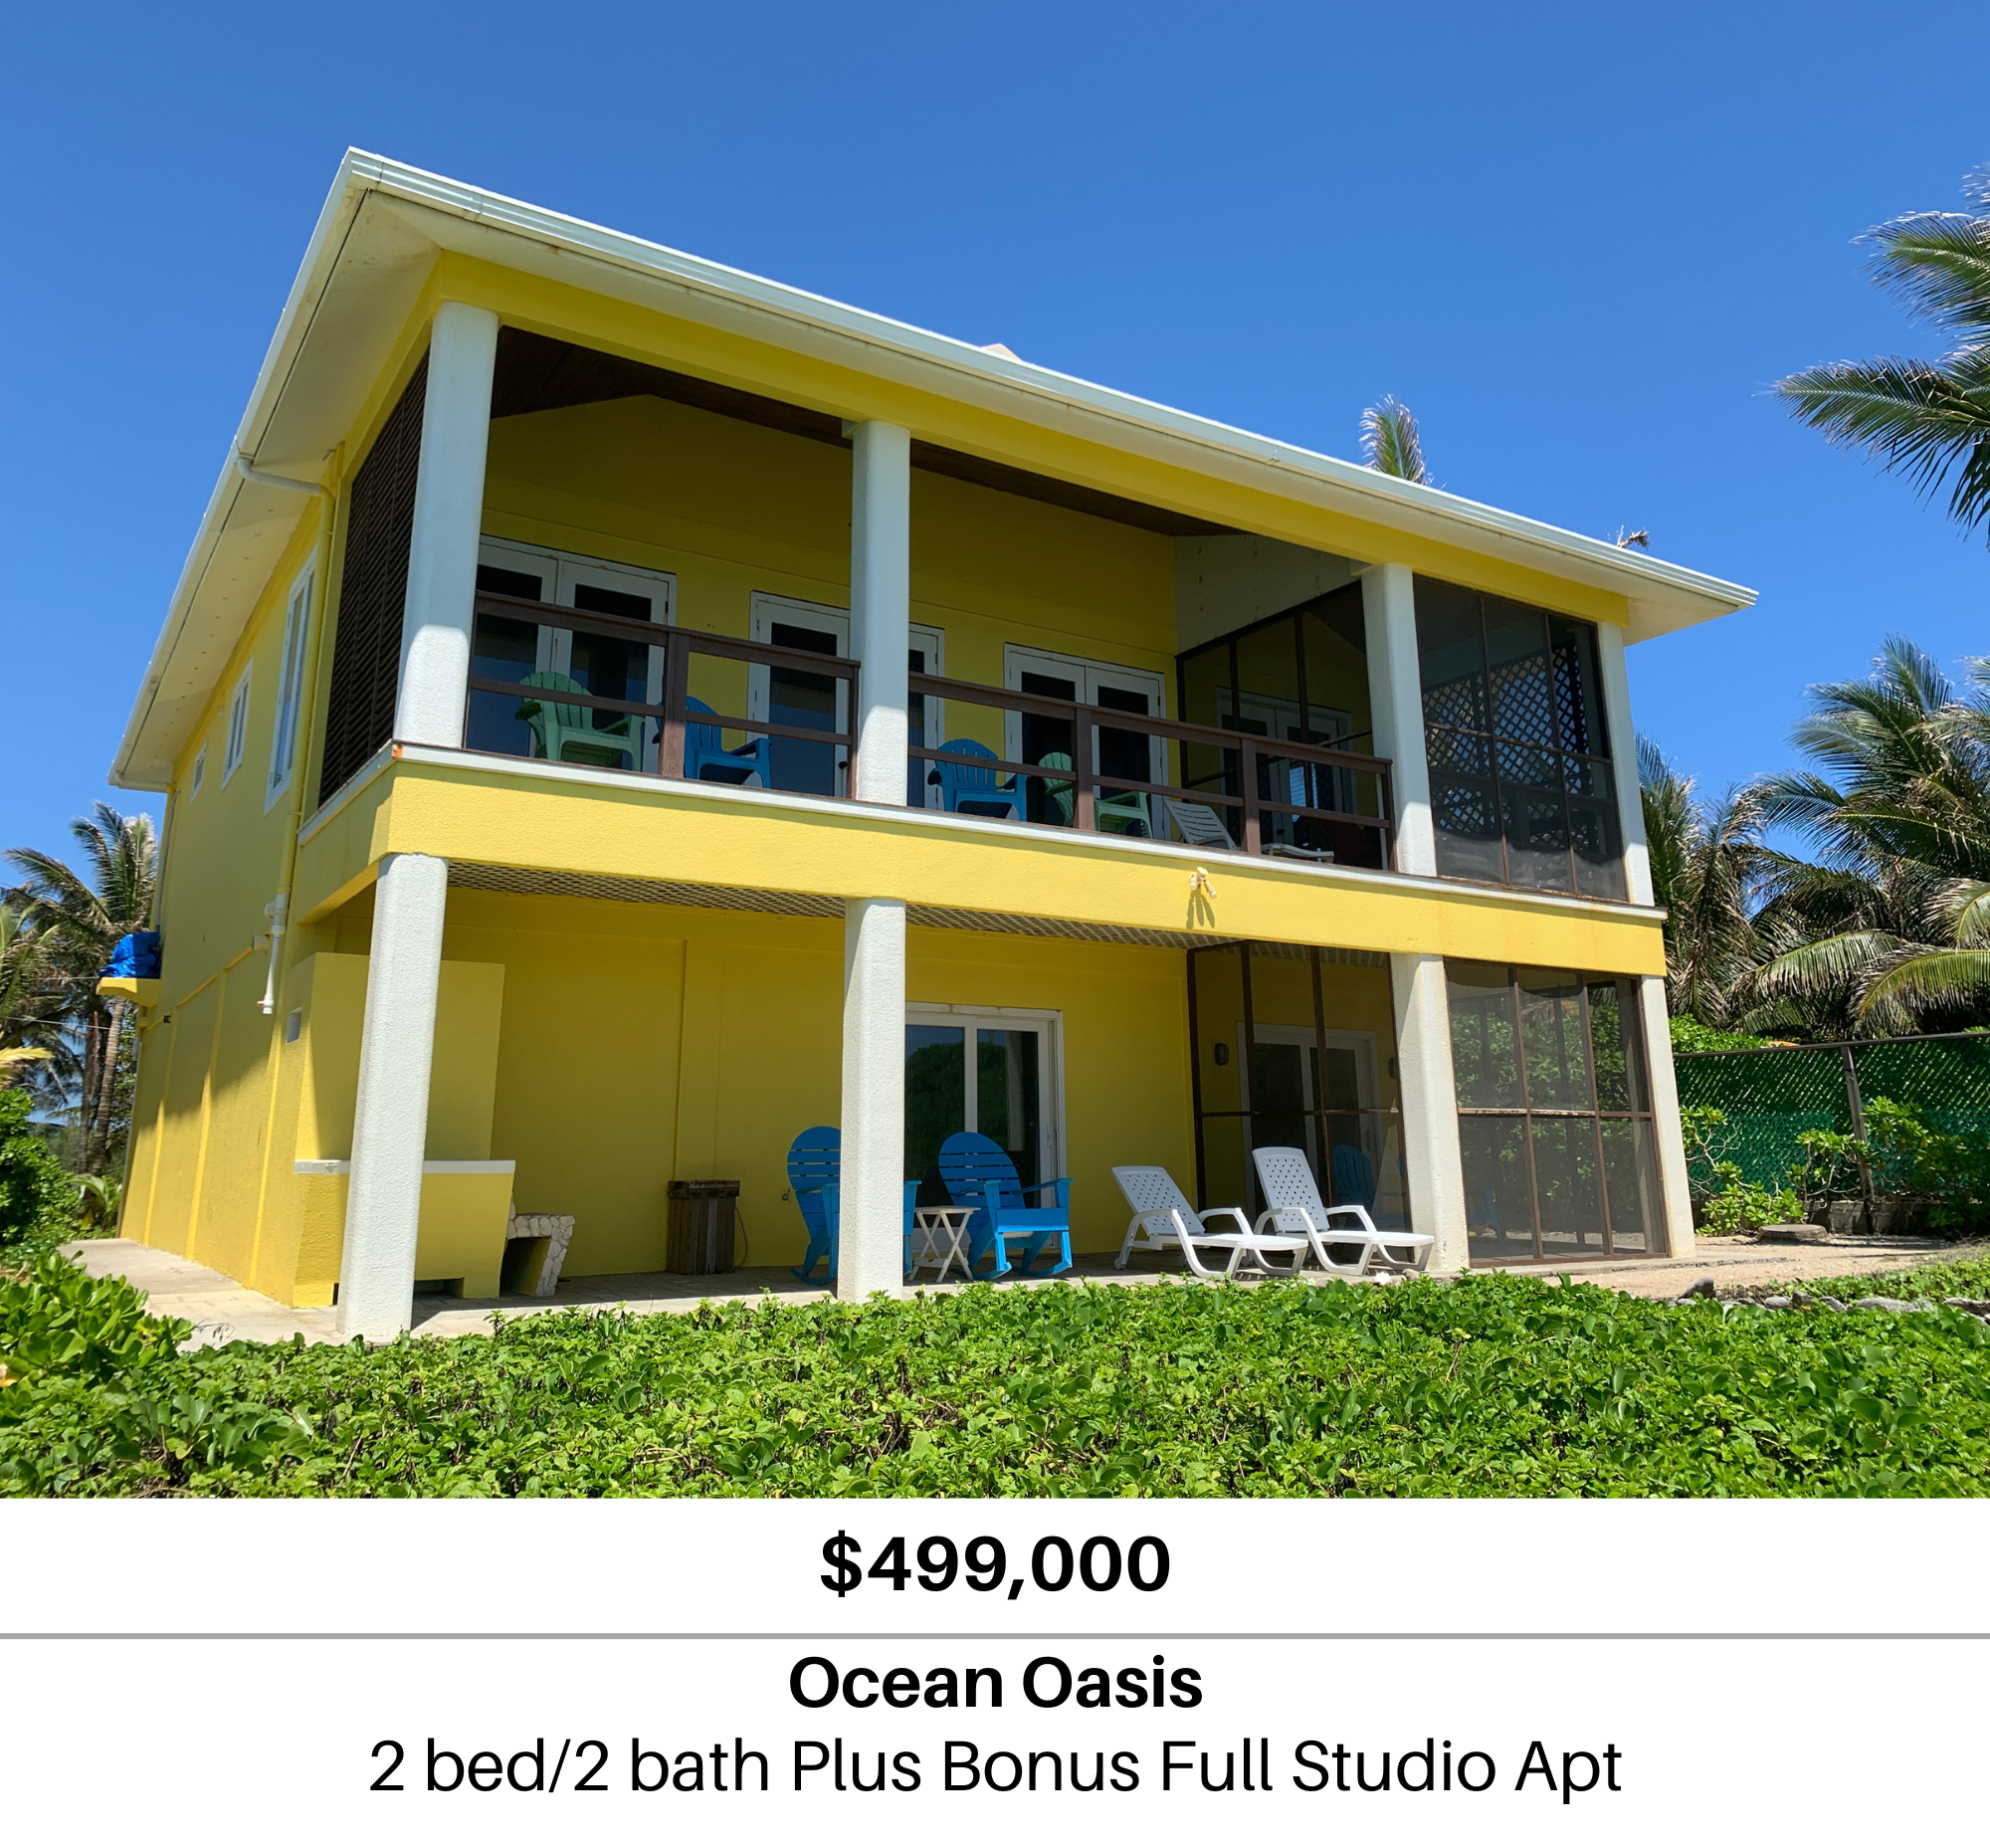 Ocean Oasis Home for Sale Paradise Cove Utila Real Estate